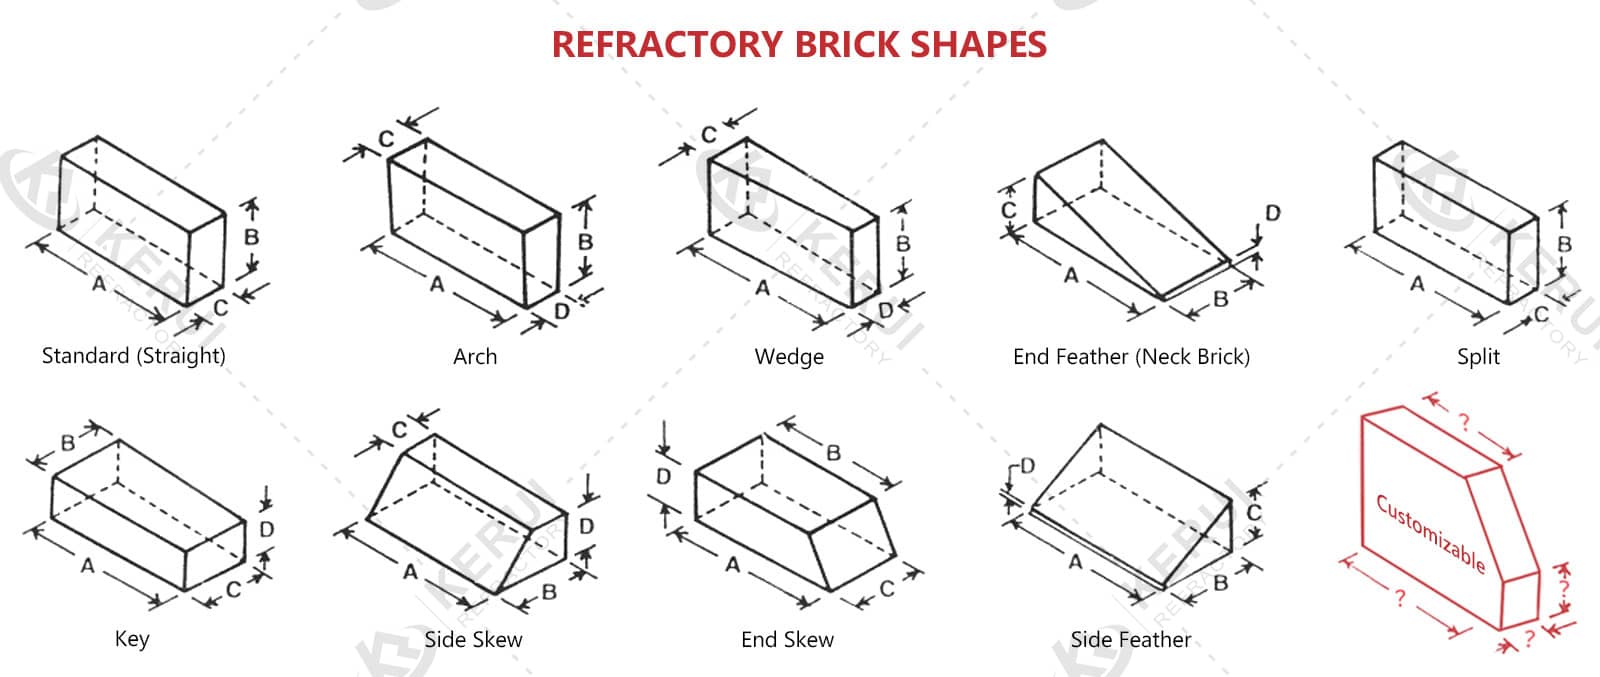 Size of Refractory Bricks